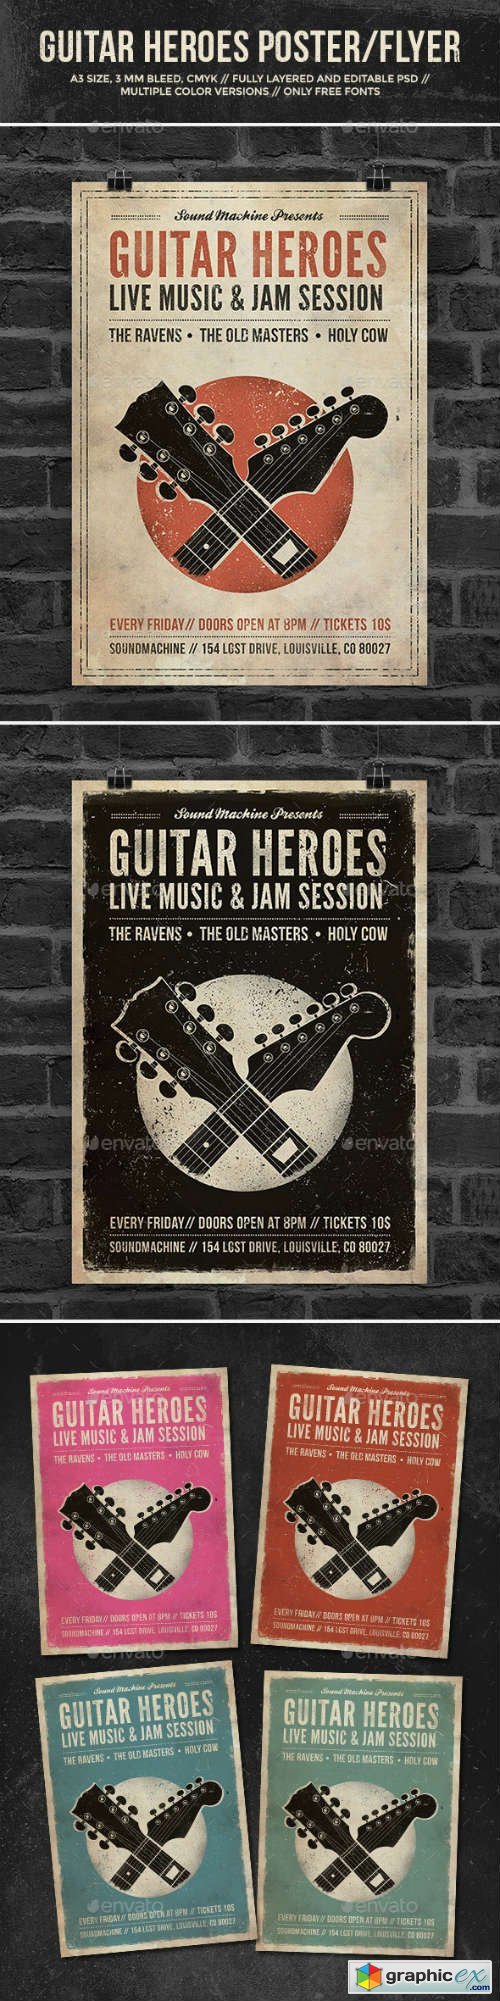 Guitar Heroes - Vintage Music Poster/Flyer